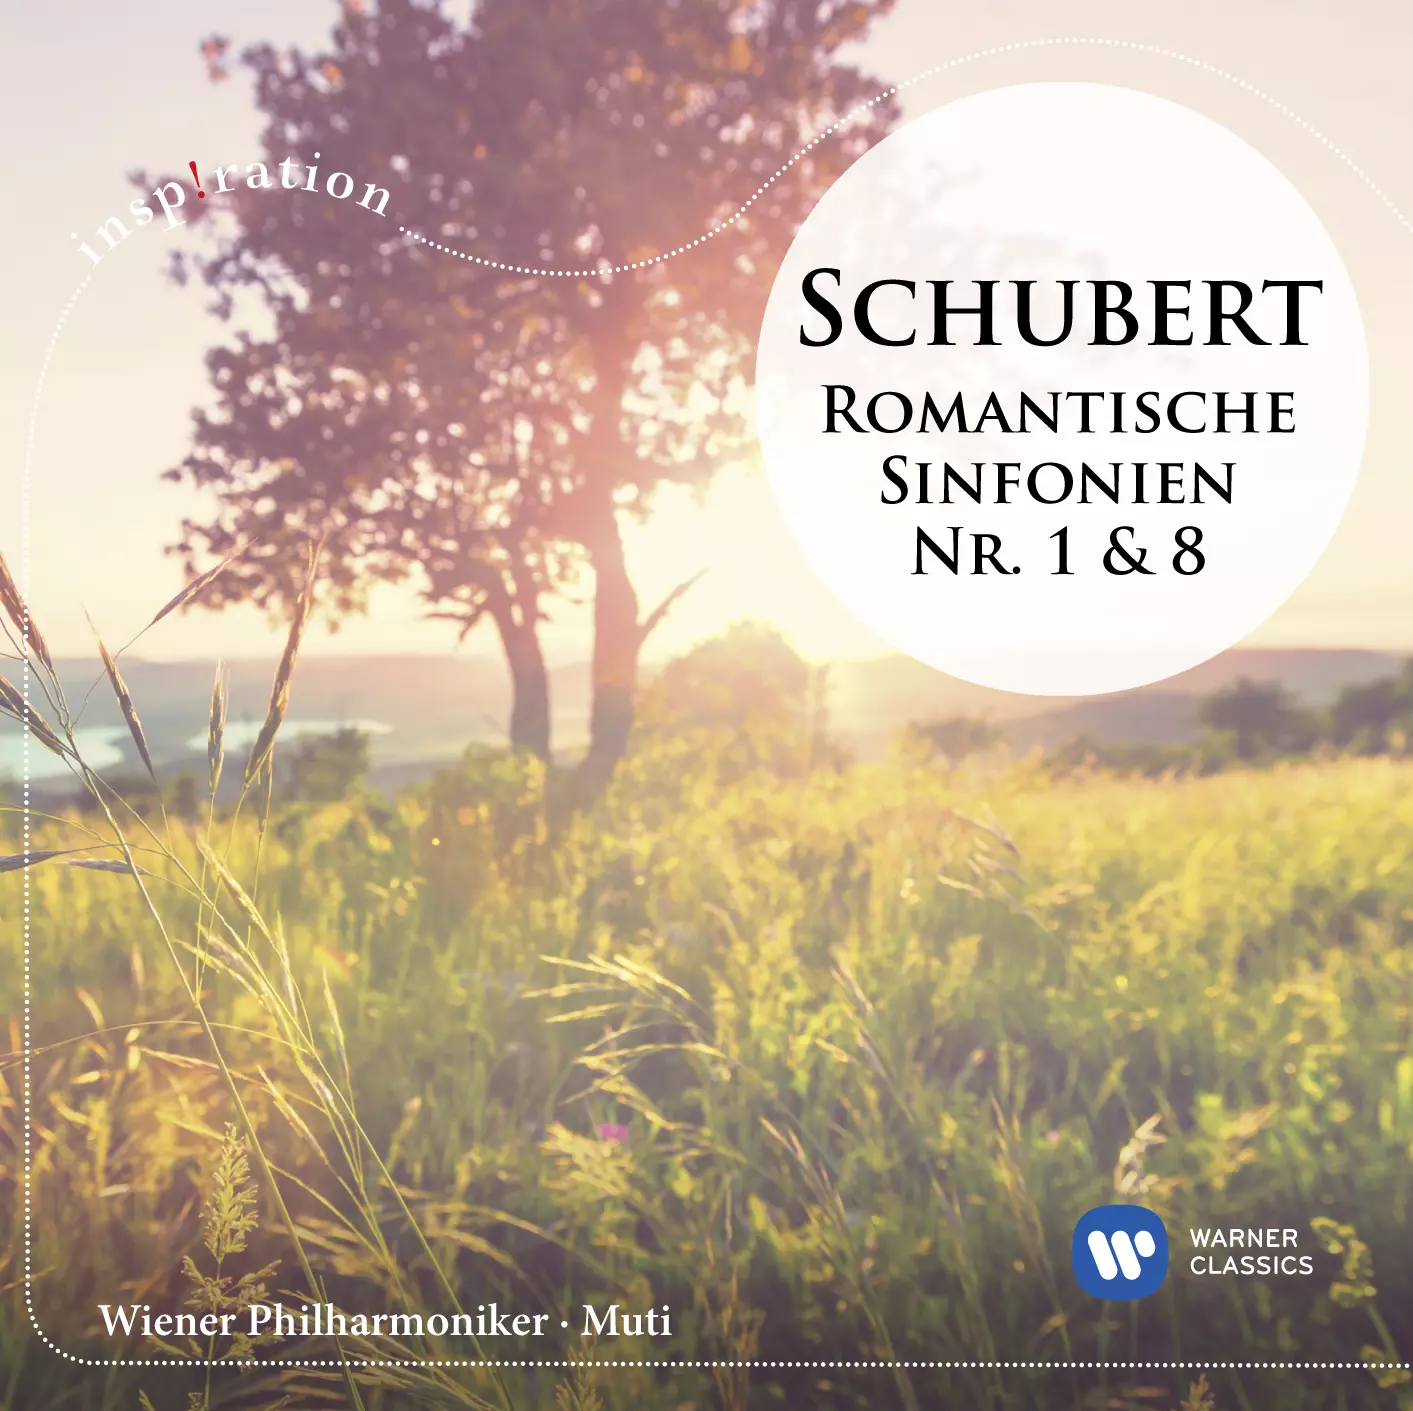 Schubert: Romantic Symphonies nos 1 & 8